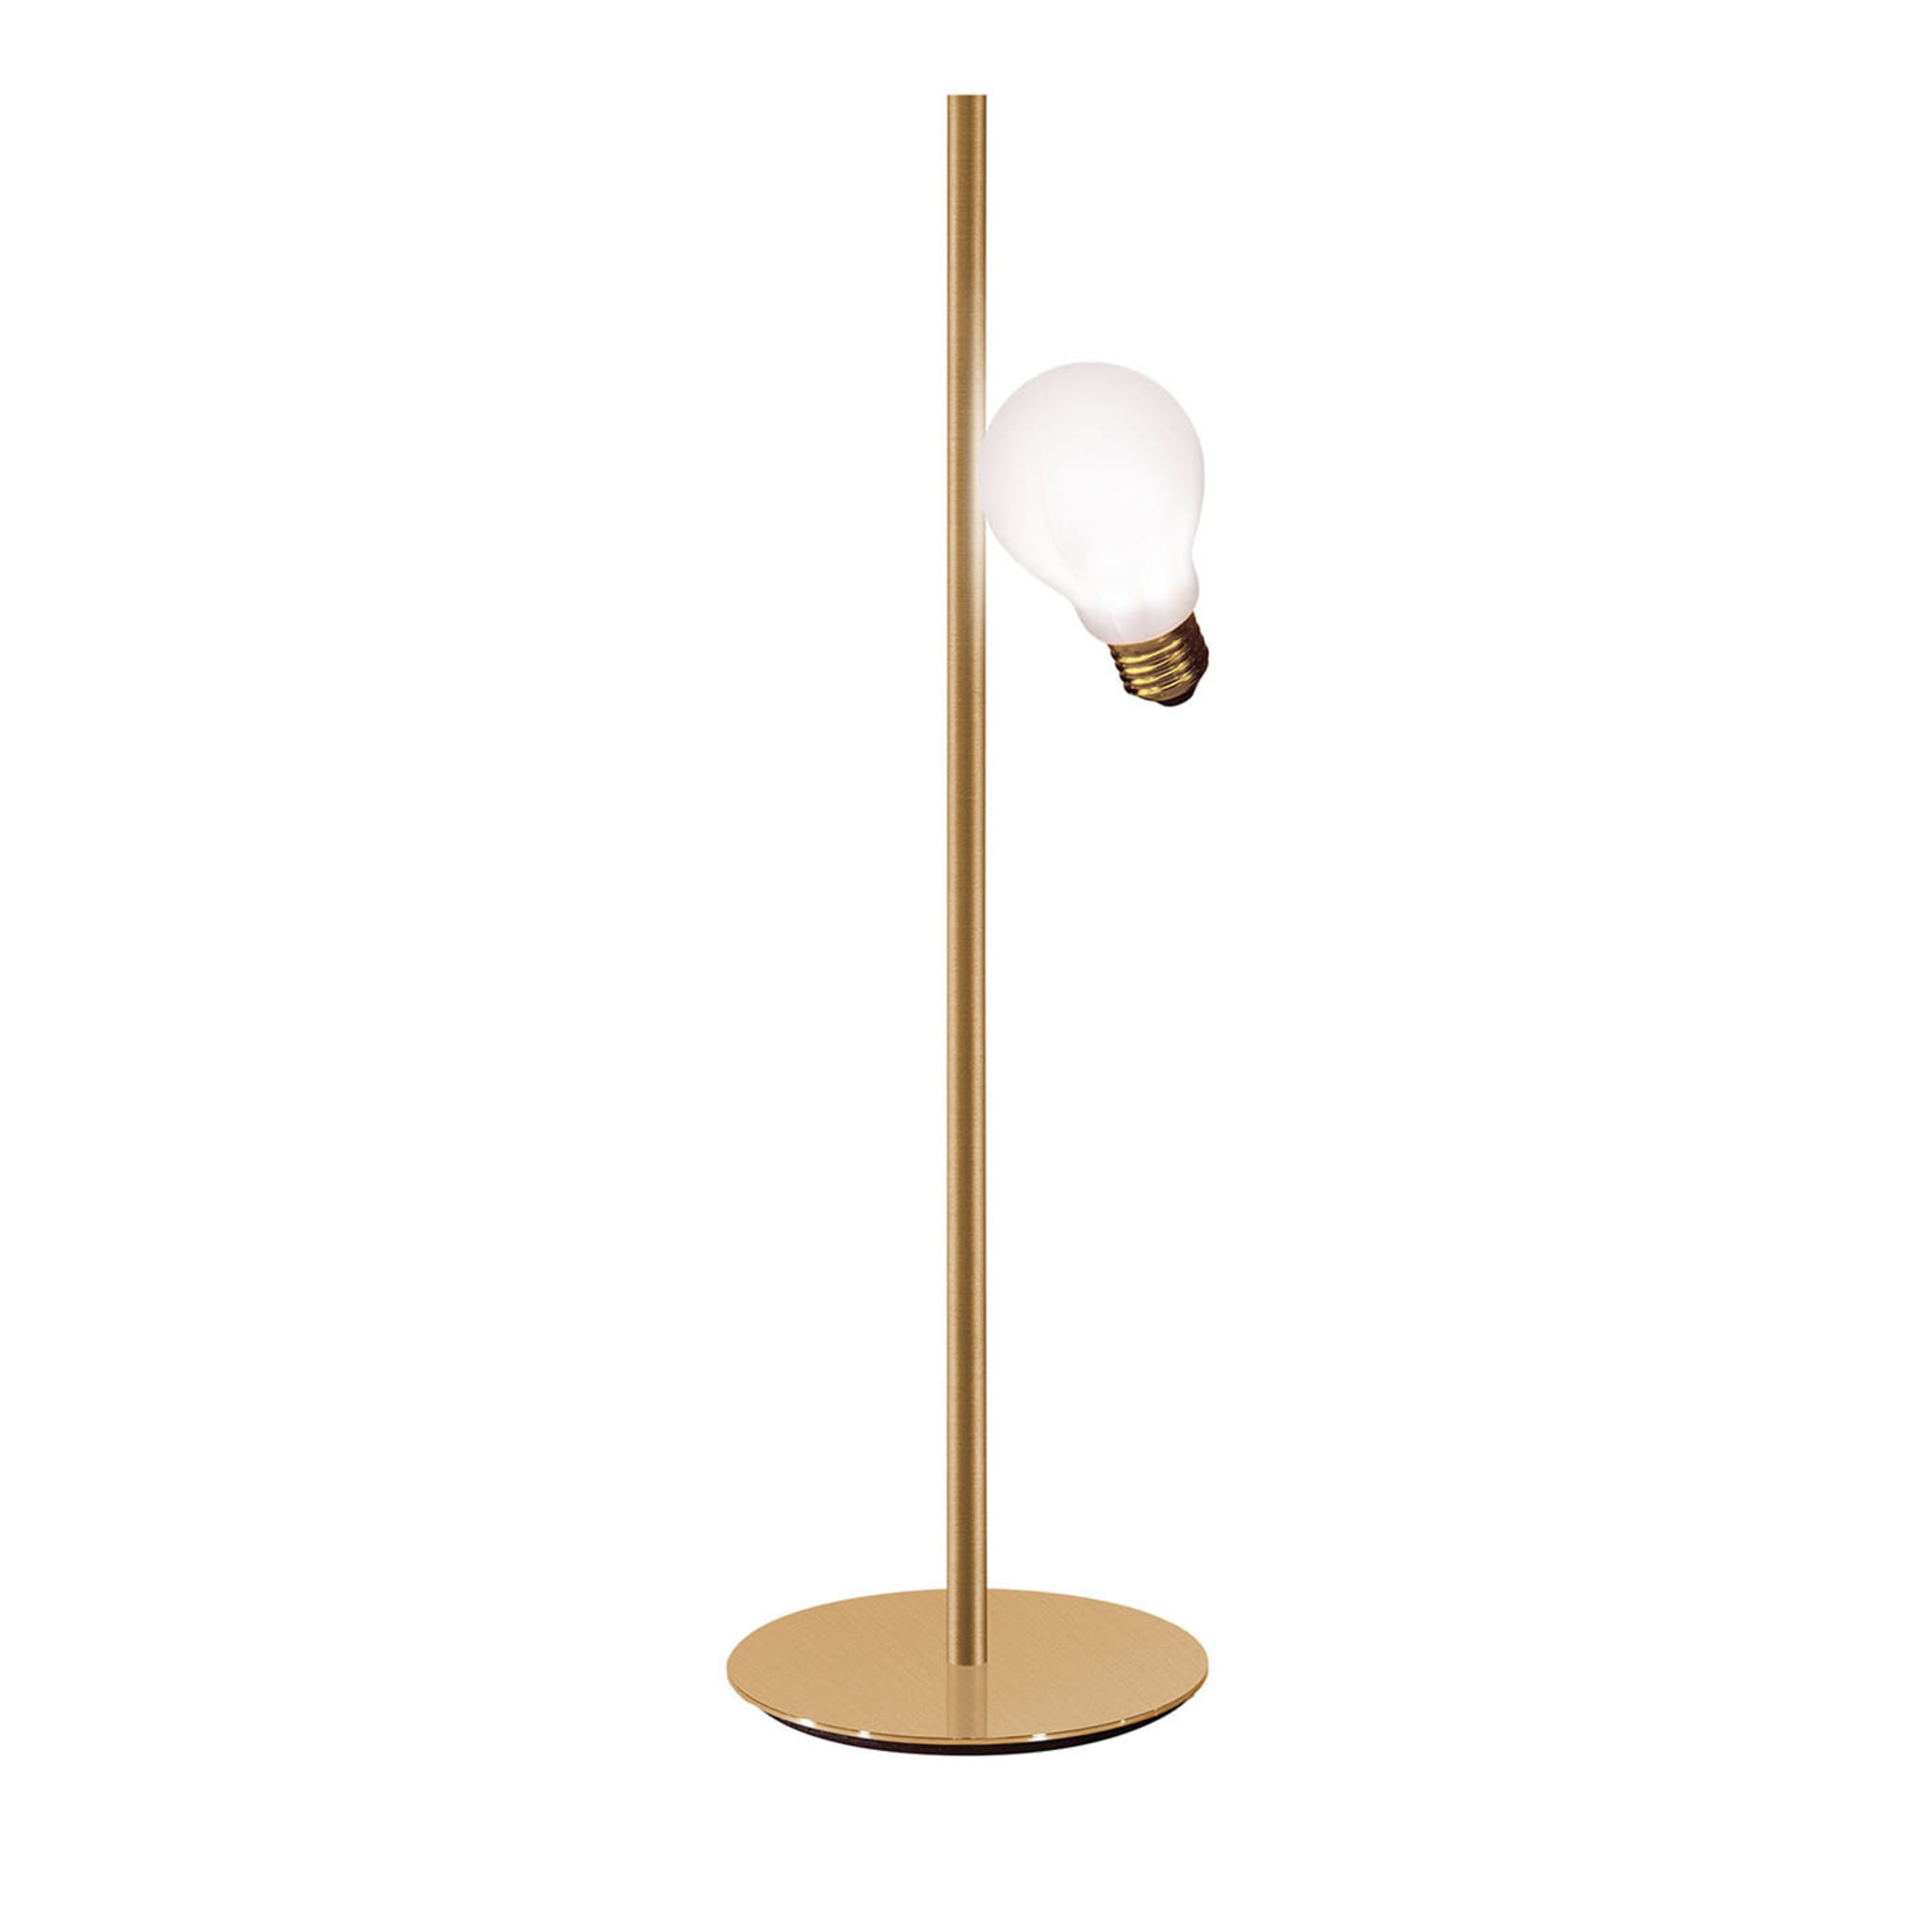 Idea Table Lamp by Marcantonio - Main view